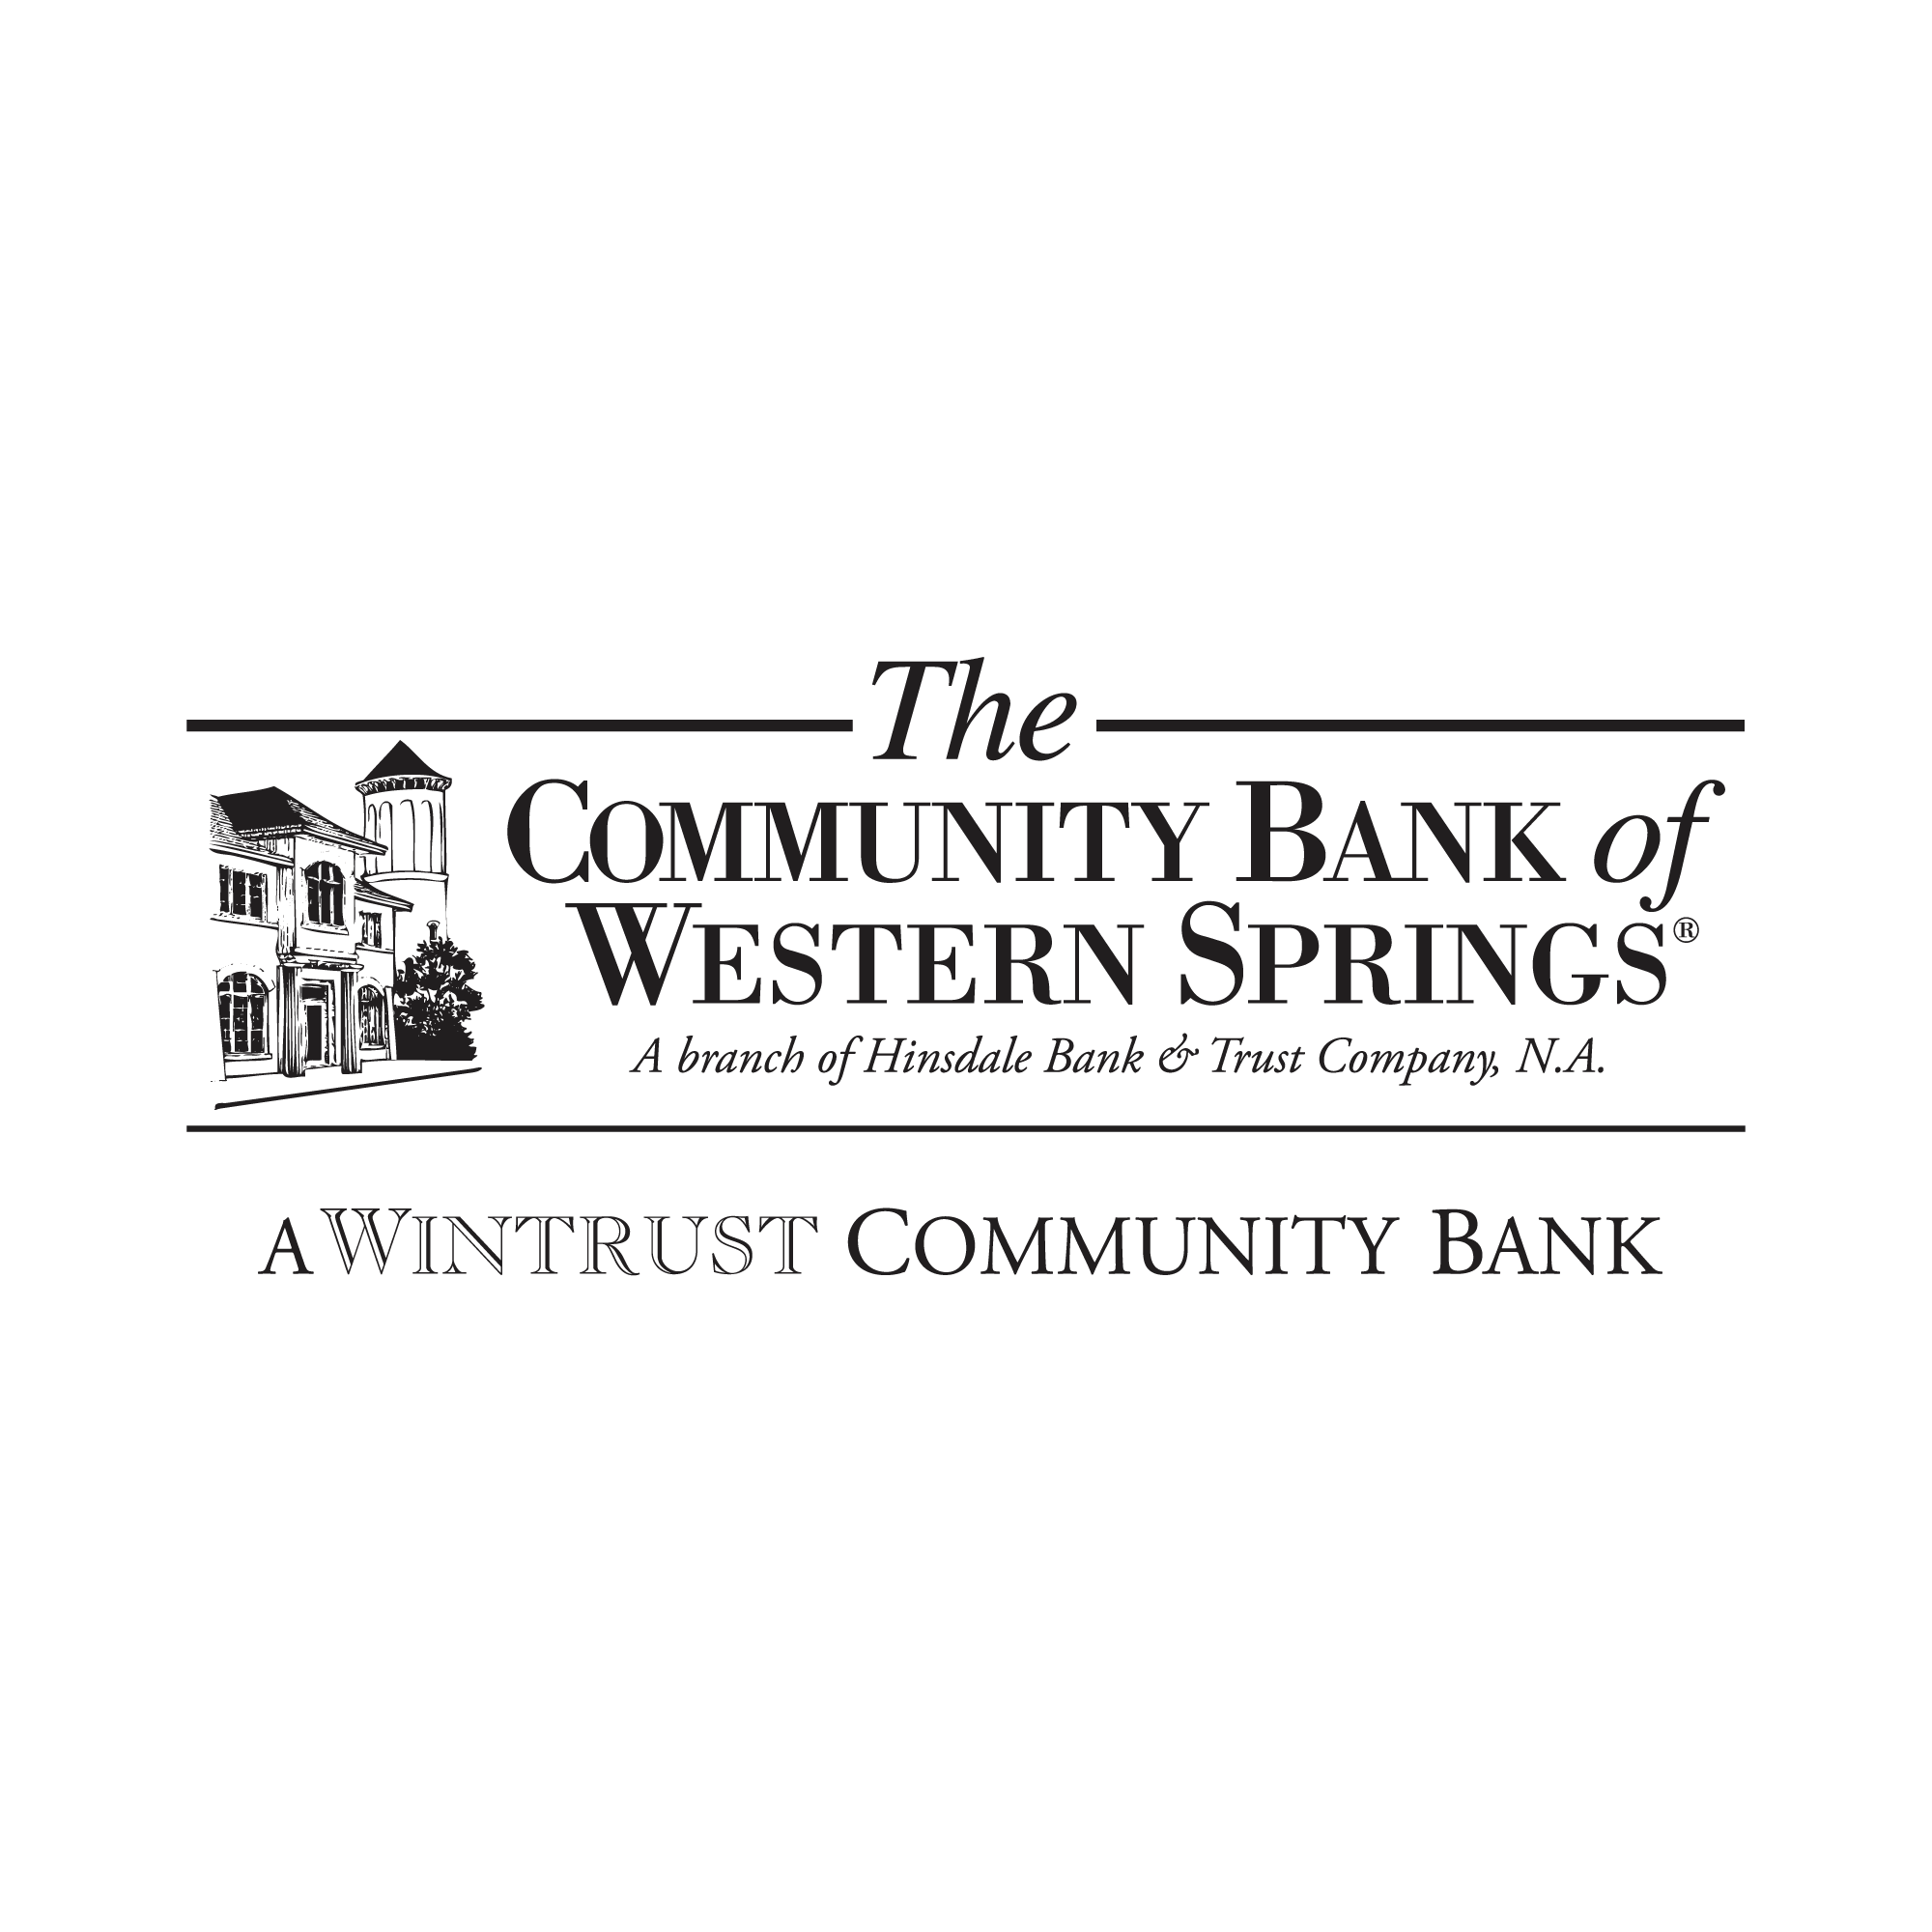 The Community Bank of Western Springs